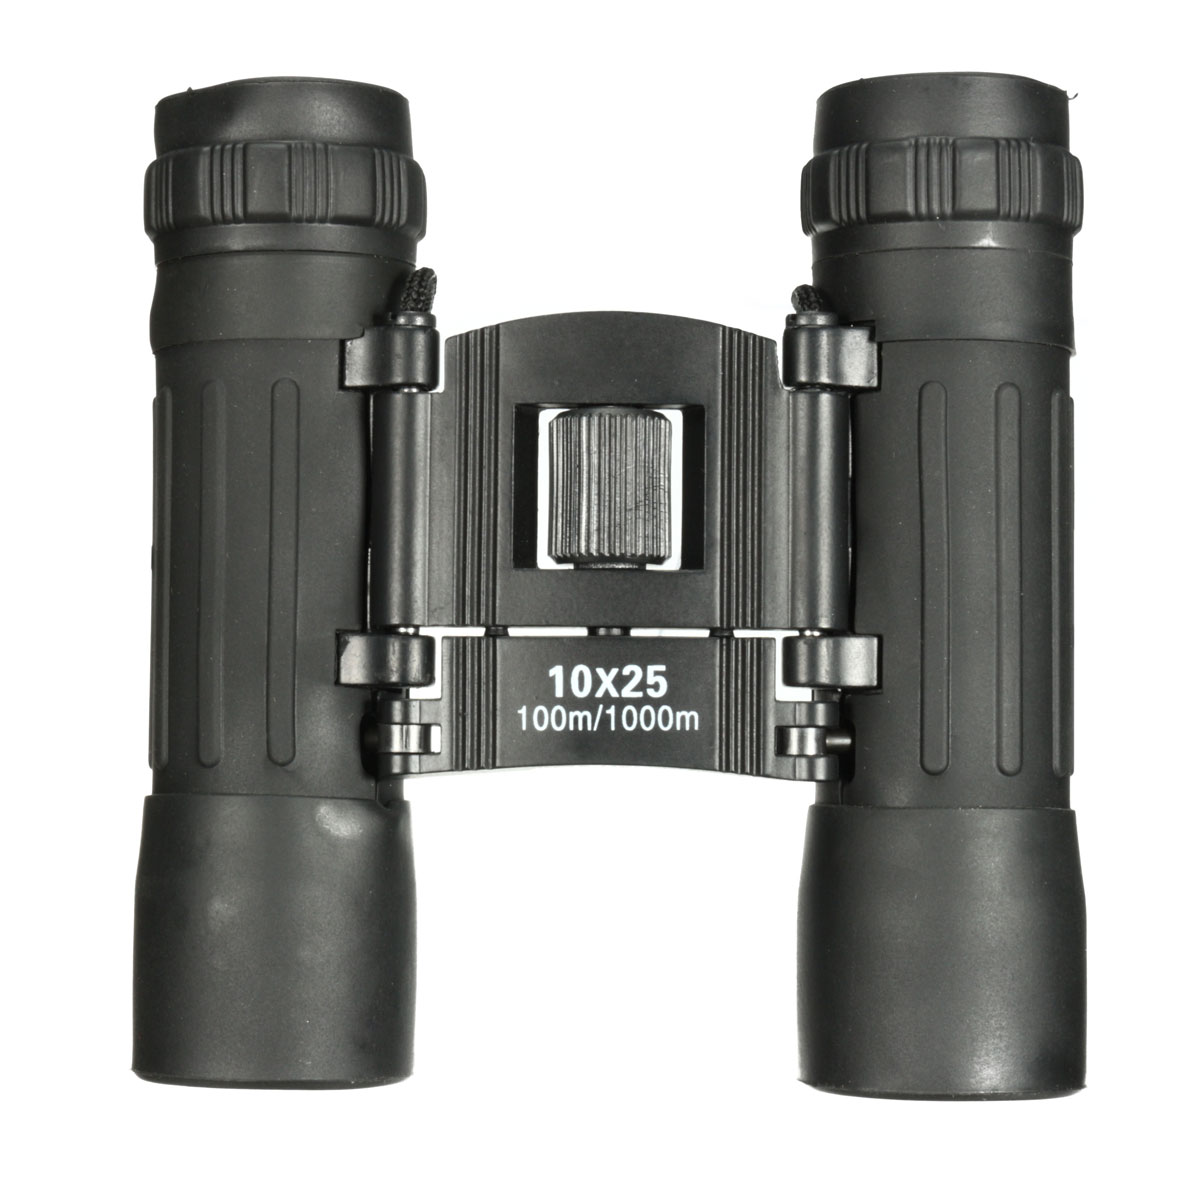 

10x25 Outdoor Portable Telescope Mini Compact Binocular HD Clear Vision Optic Lens Eyepiece